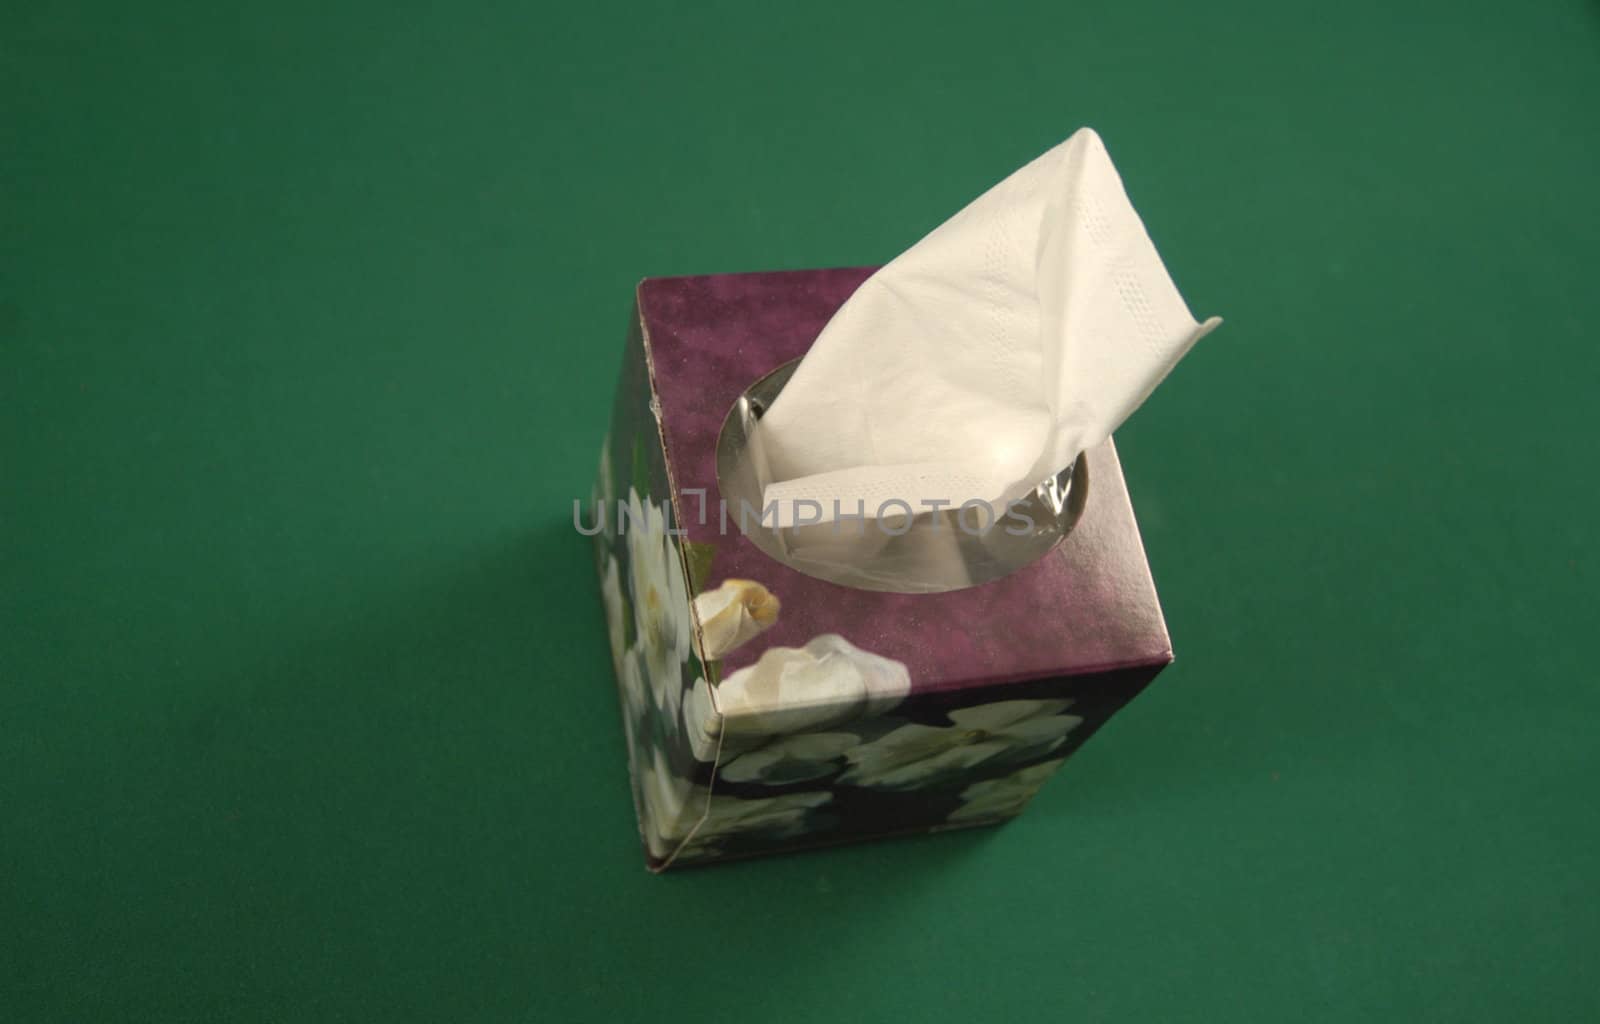 Tissue box by northwoodsphoto